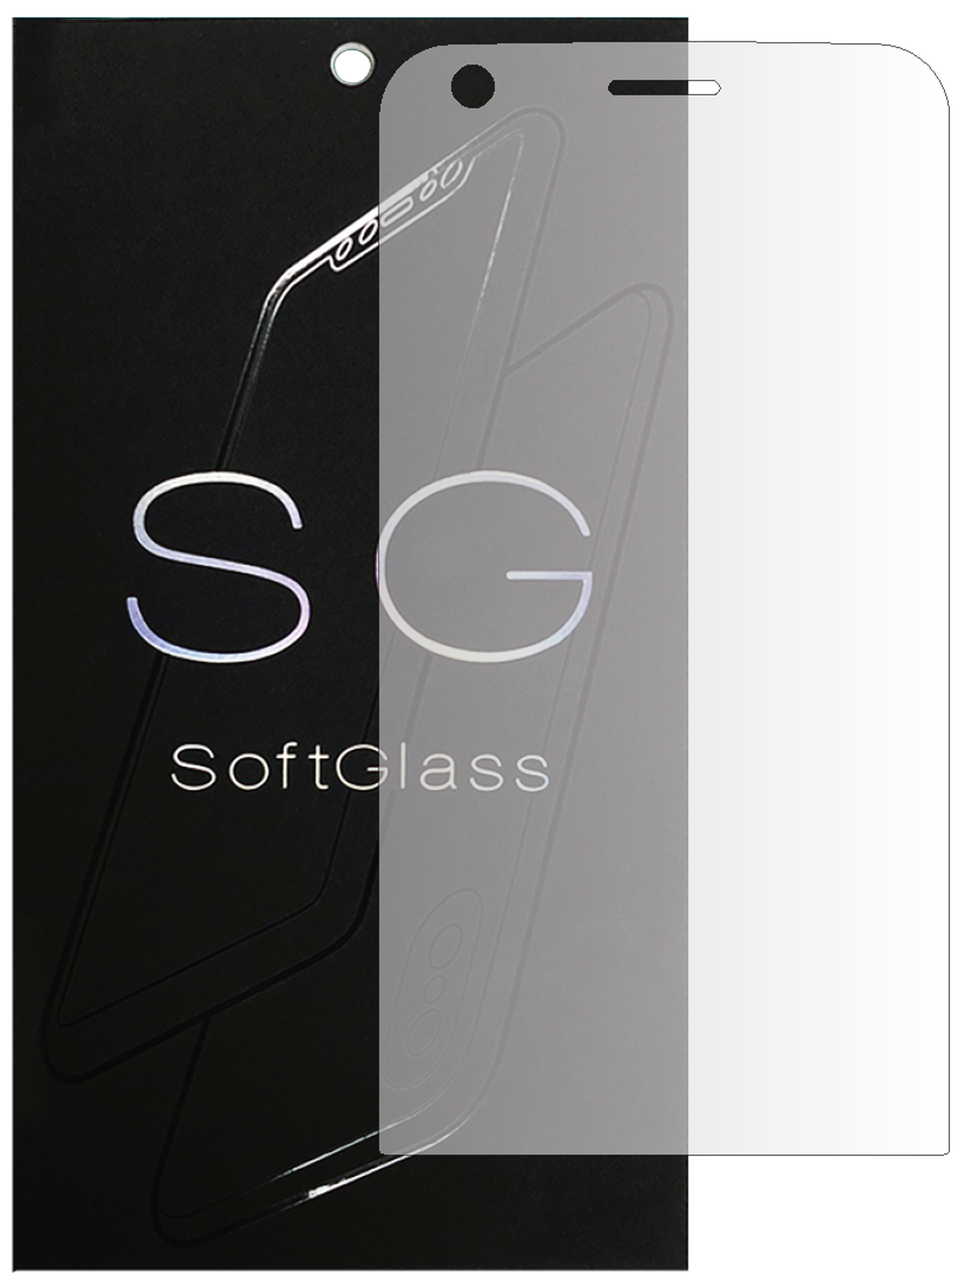 Бронеплівка LG G5 на екран поліуретанова SoftGlass